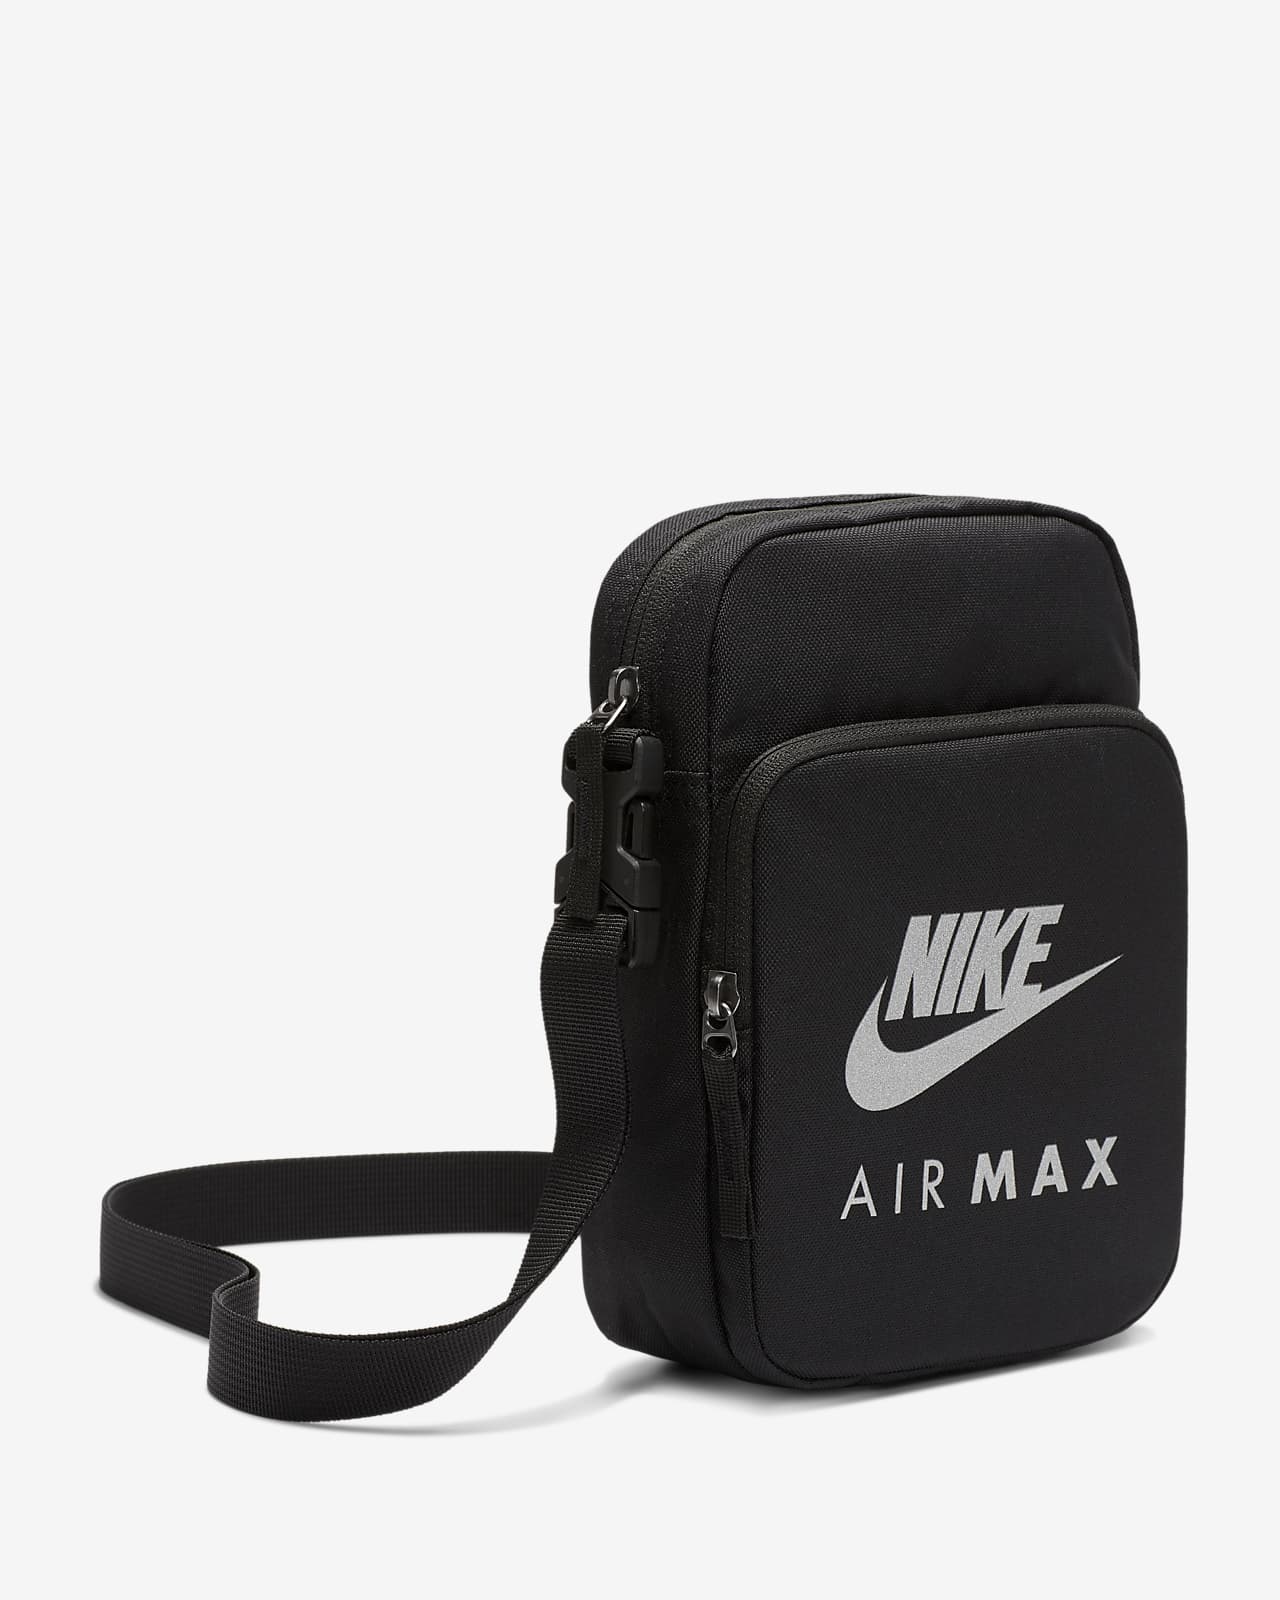 air max fanny pack